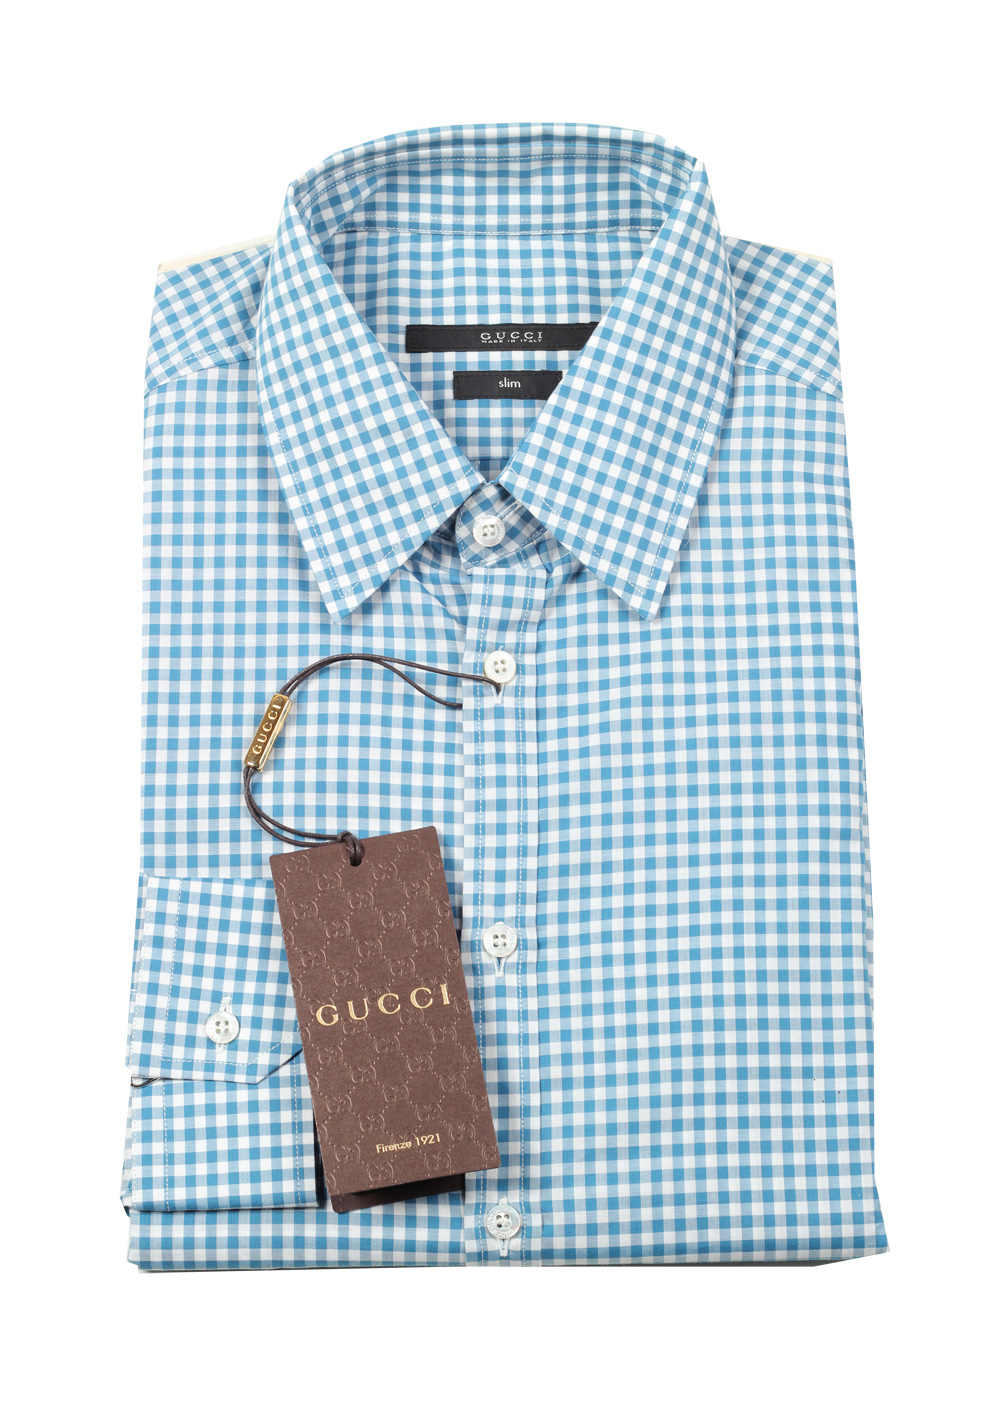 Gucci Checked Blue Dress Shirt Size 43 / 17 U.S. Slim | Costume Limité